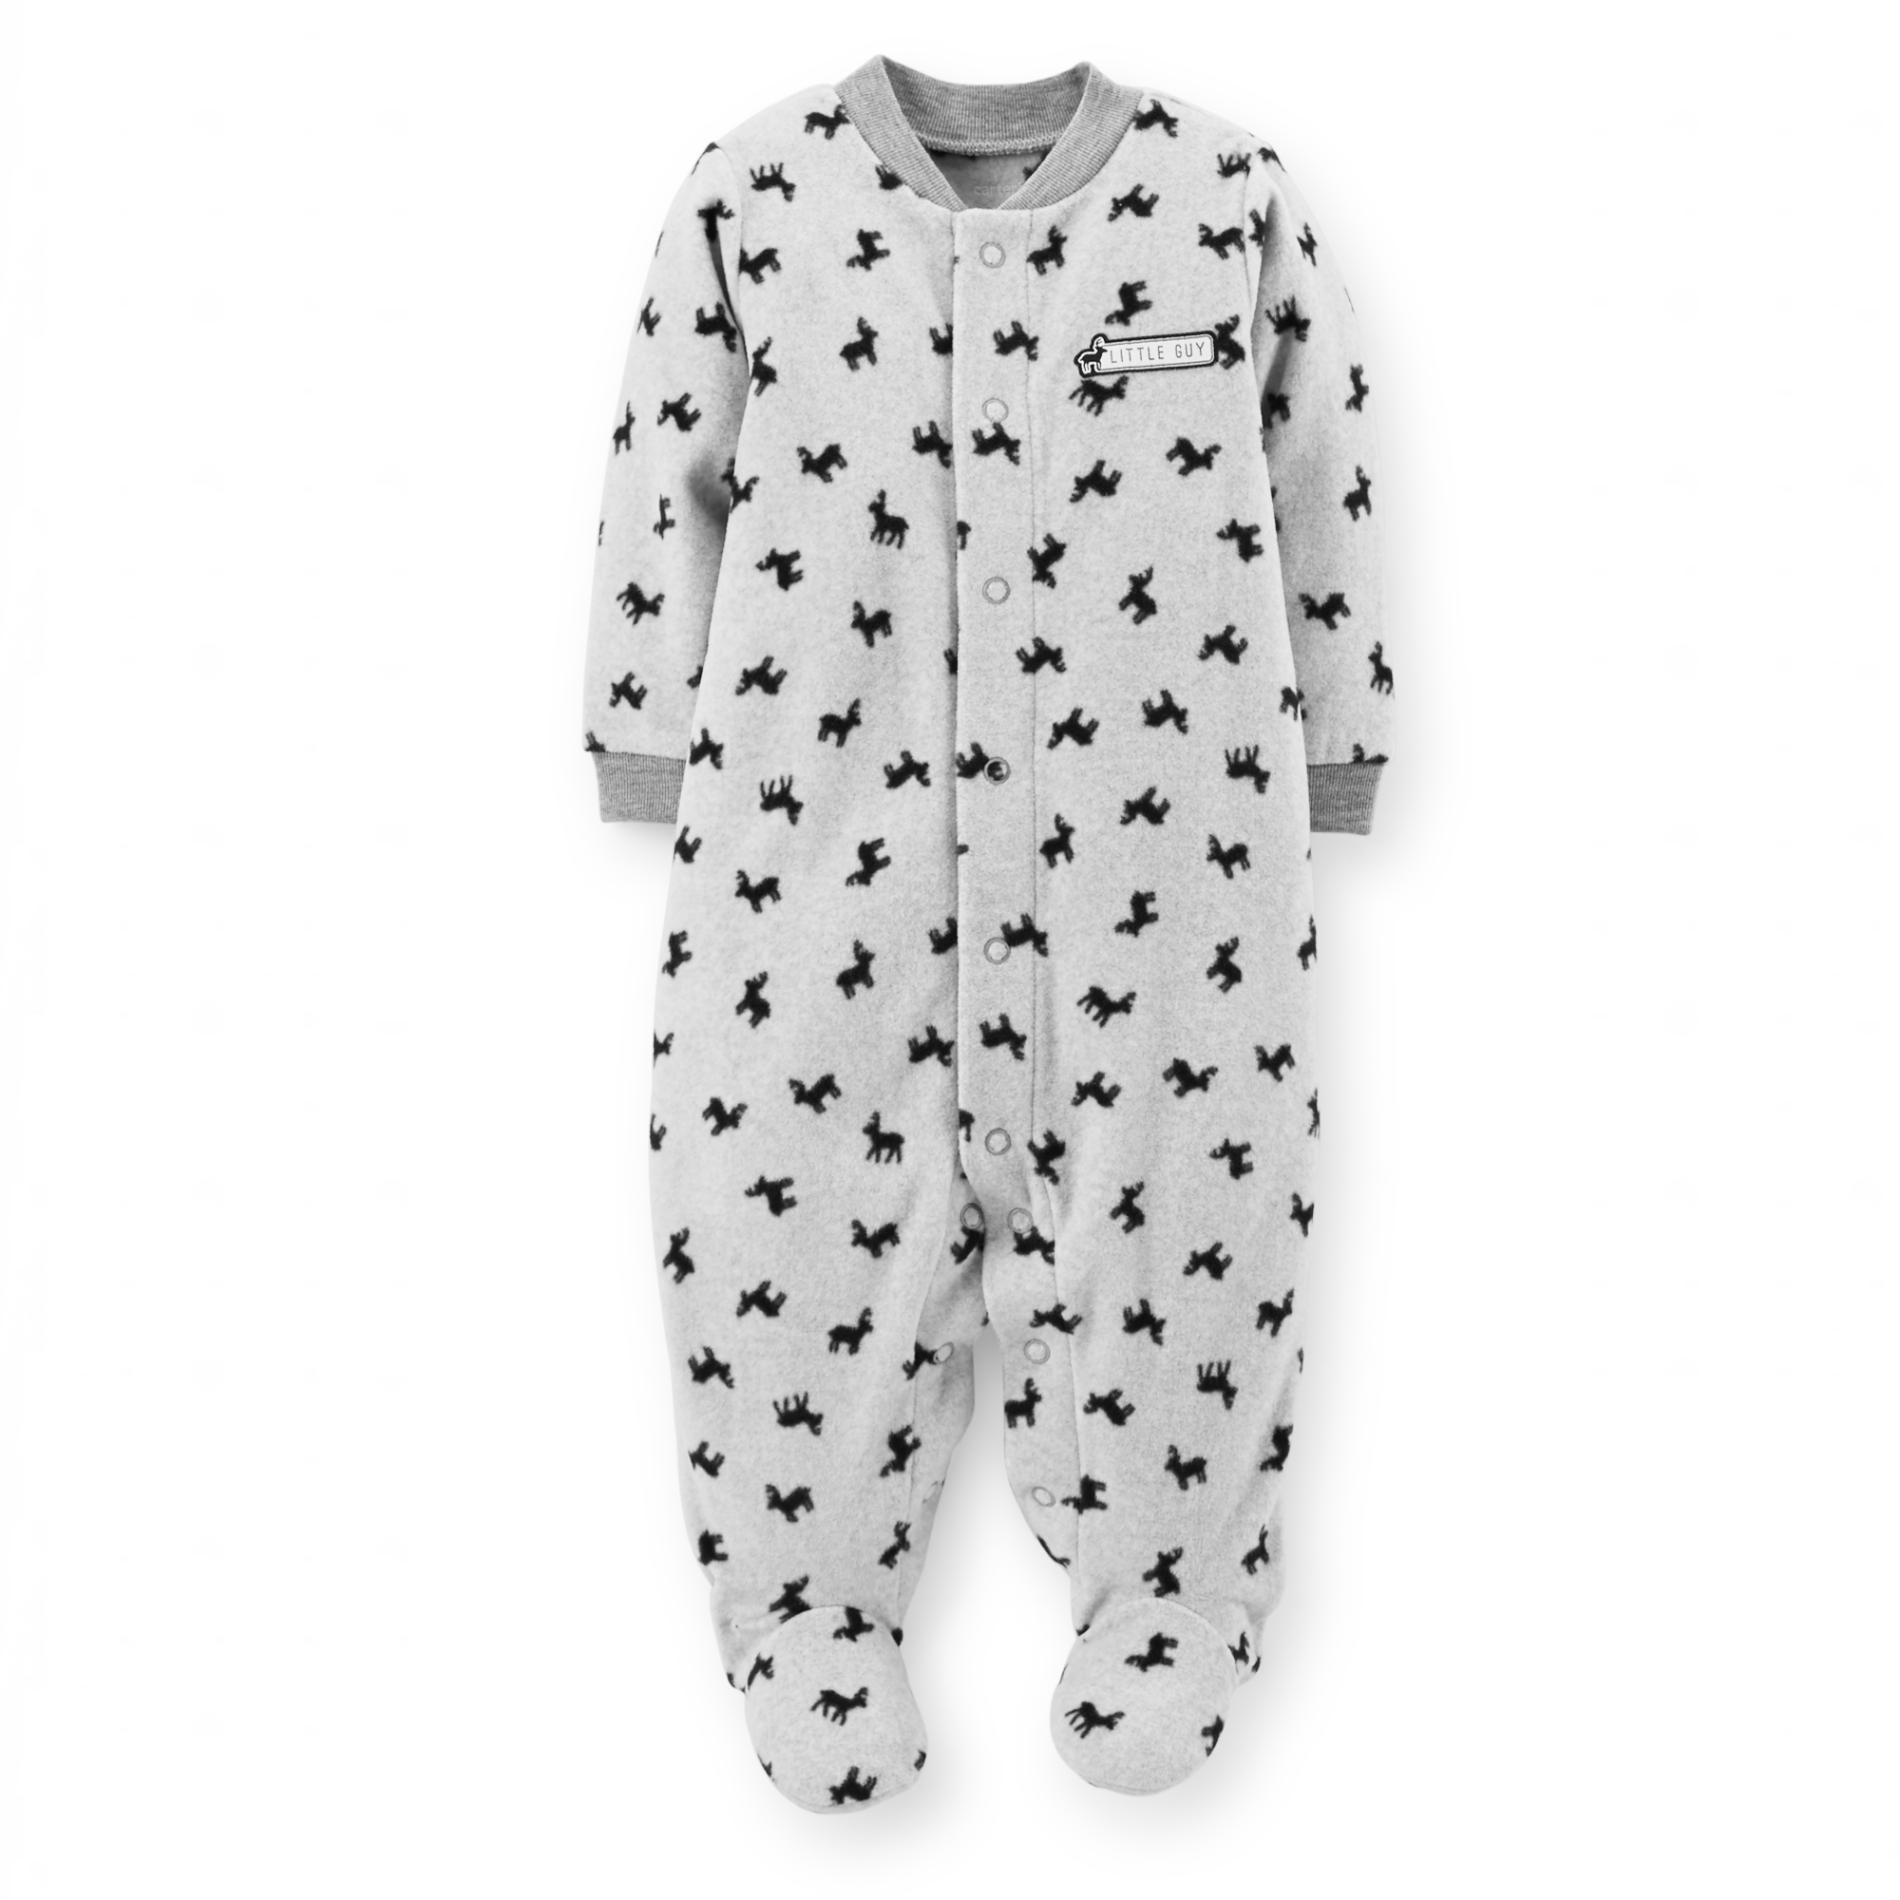 Carter's Newborn Boy's Footed Microfleece Pajamas - Reindeer